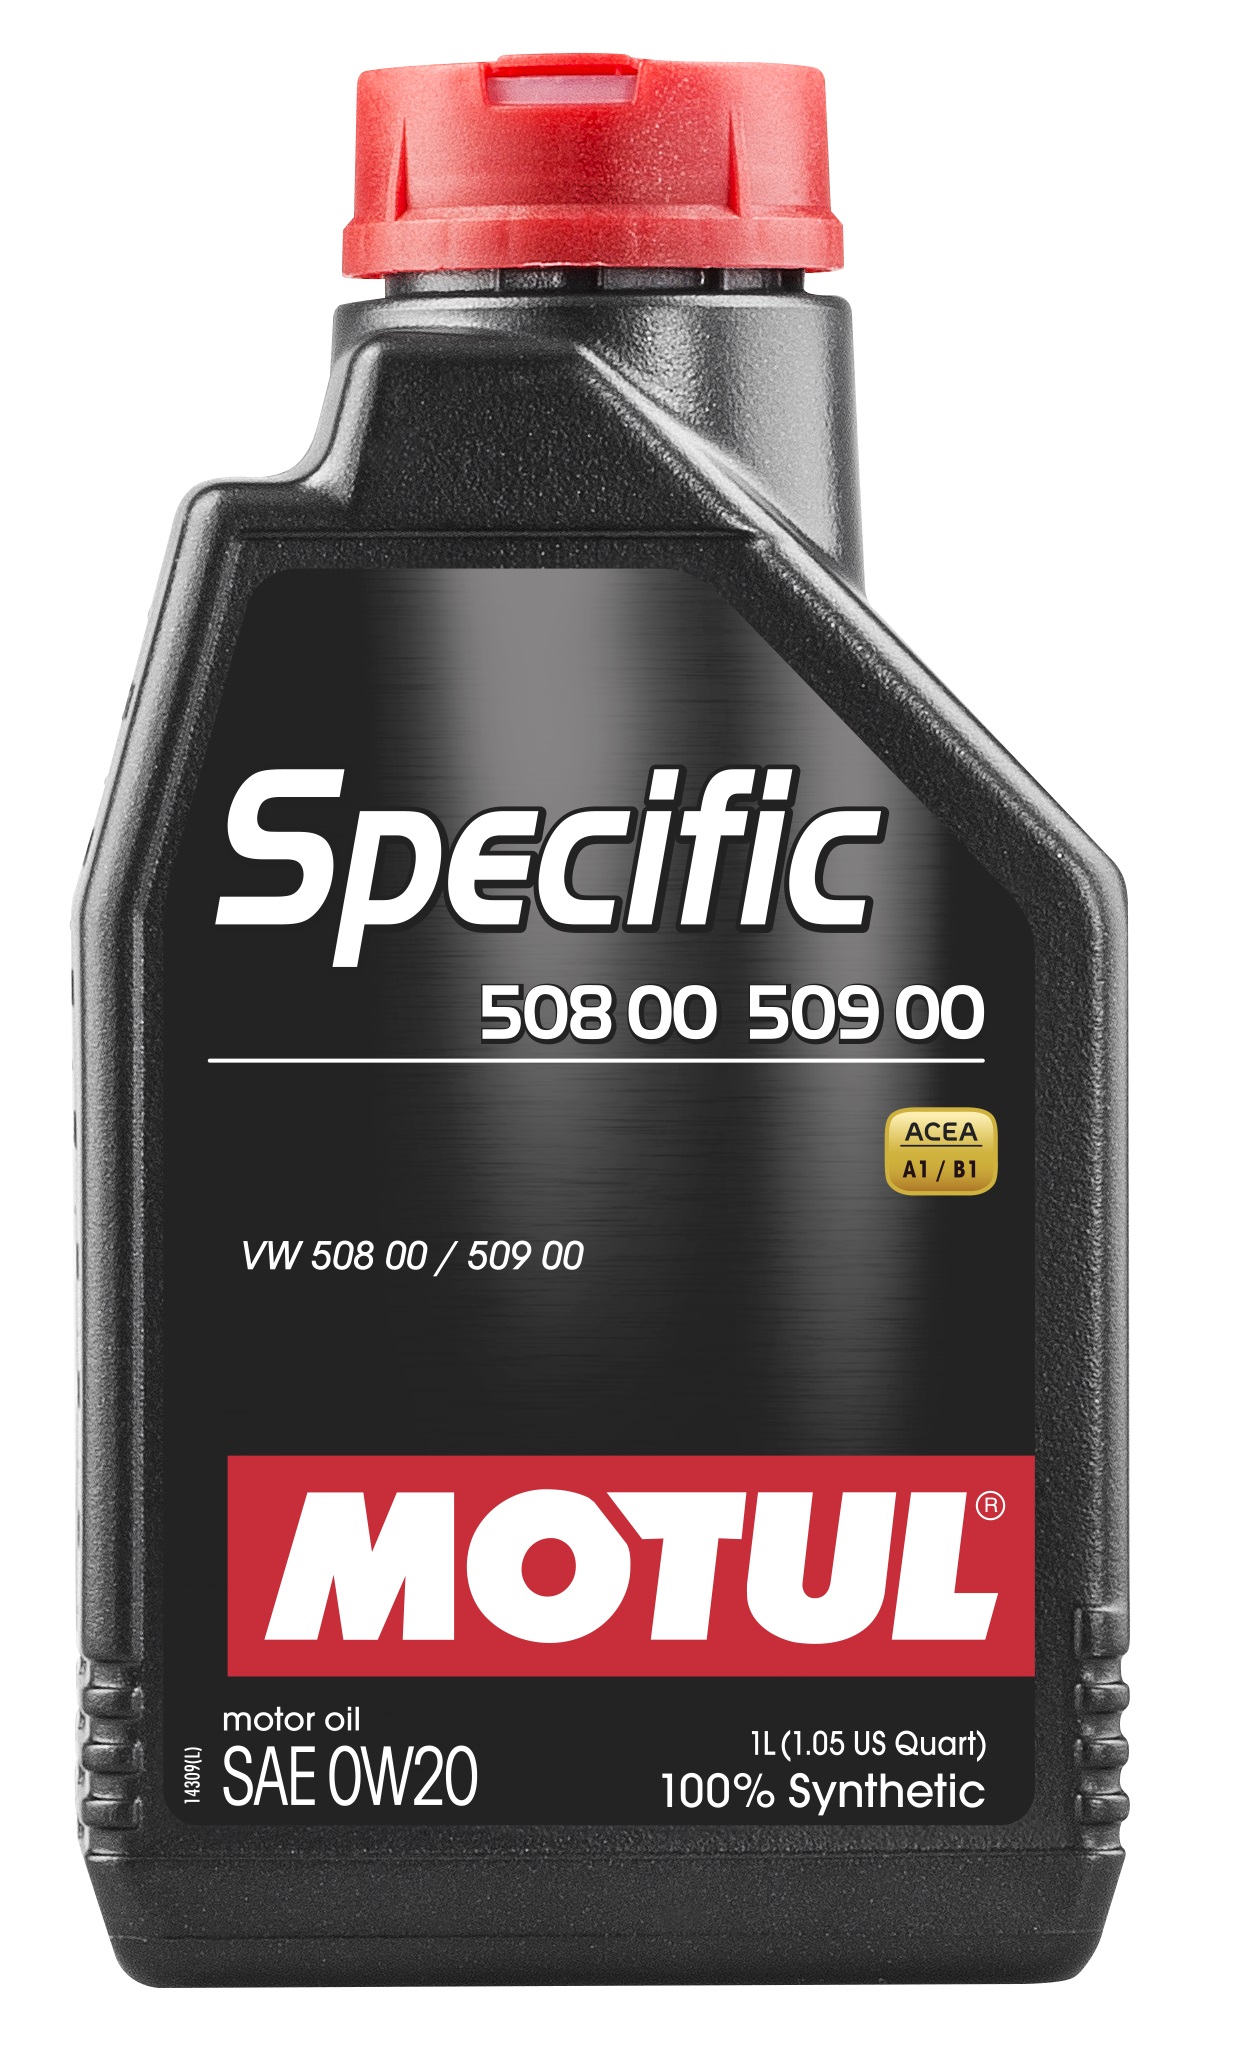 MOTUL SPECIFIC 508 00 509 00 0W20 - 1L - Synthetic Engine Oil